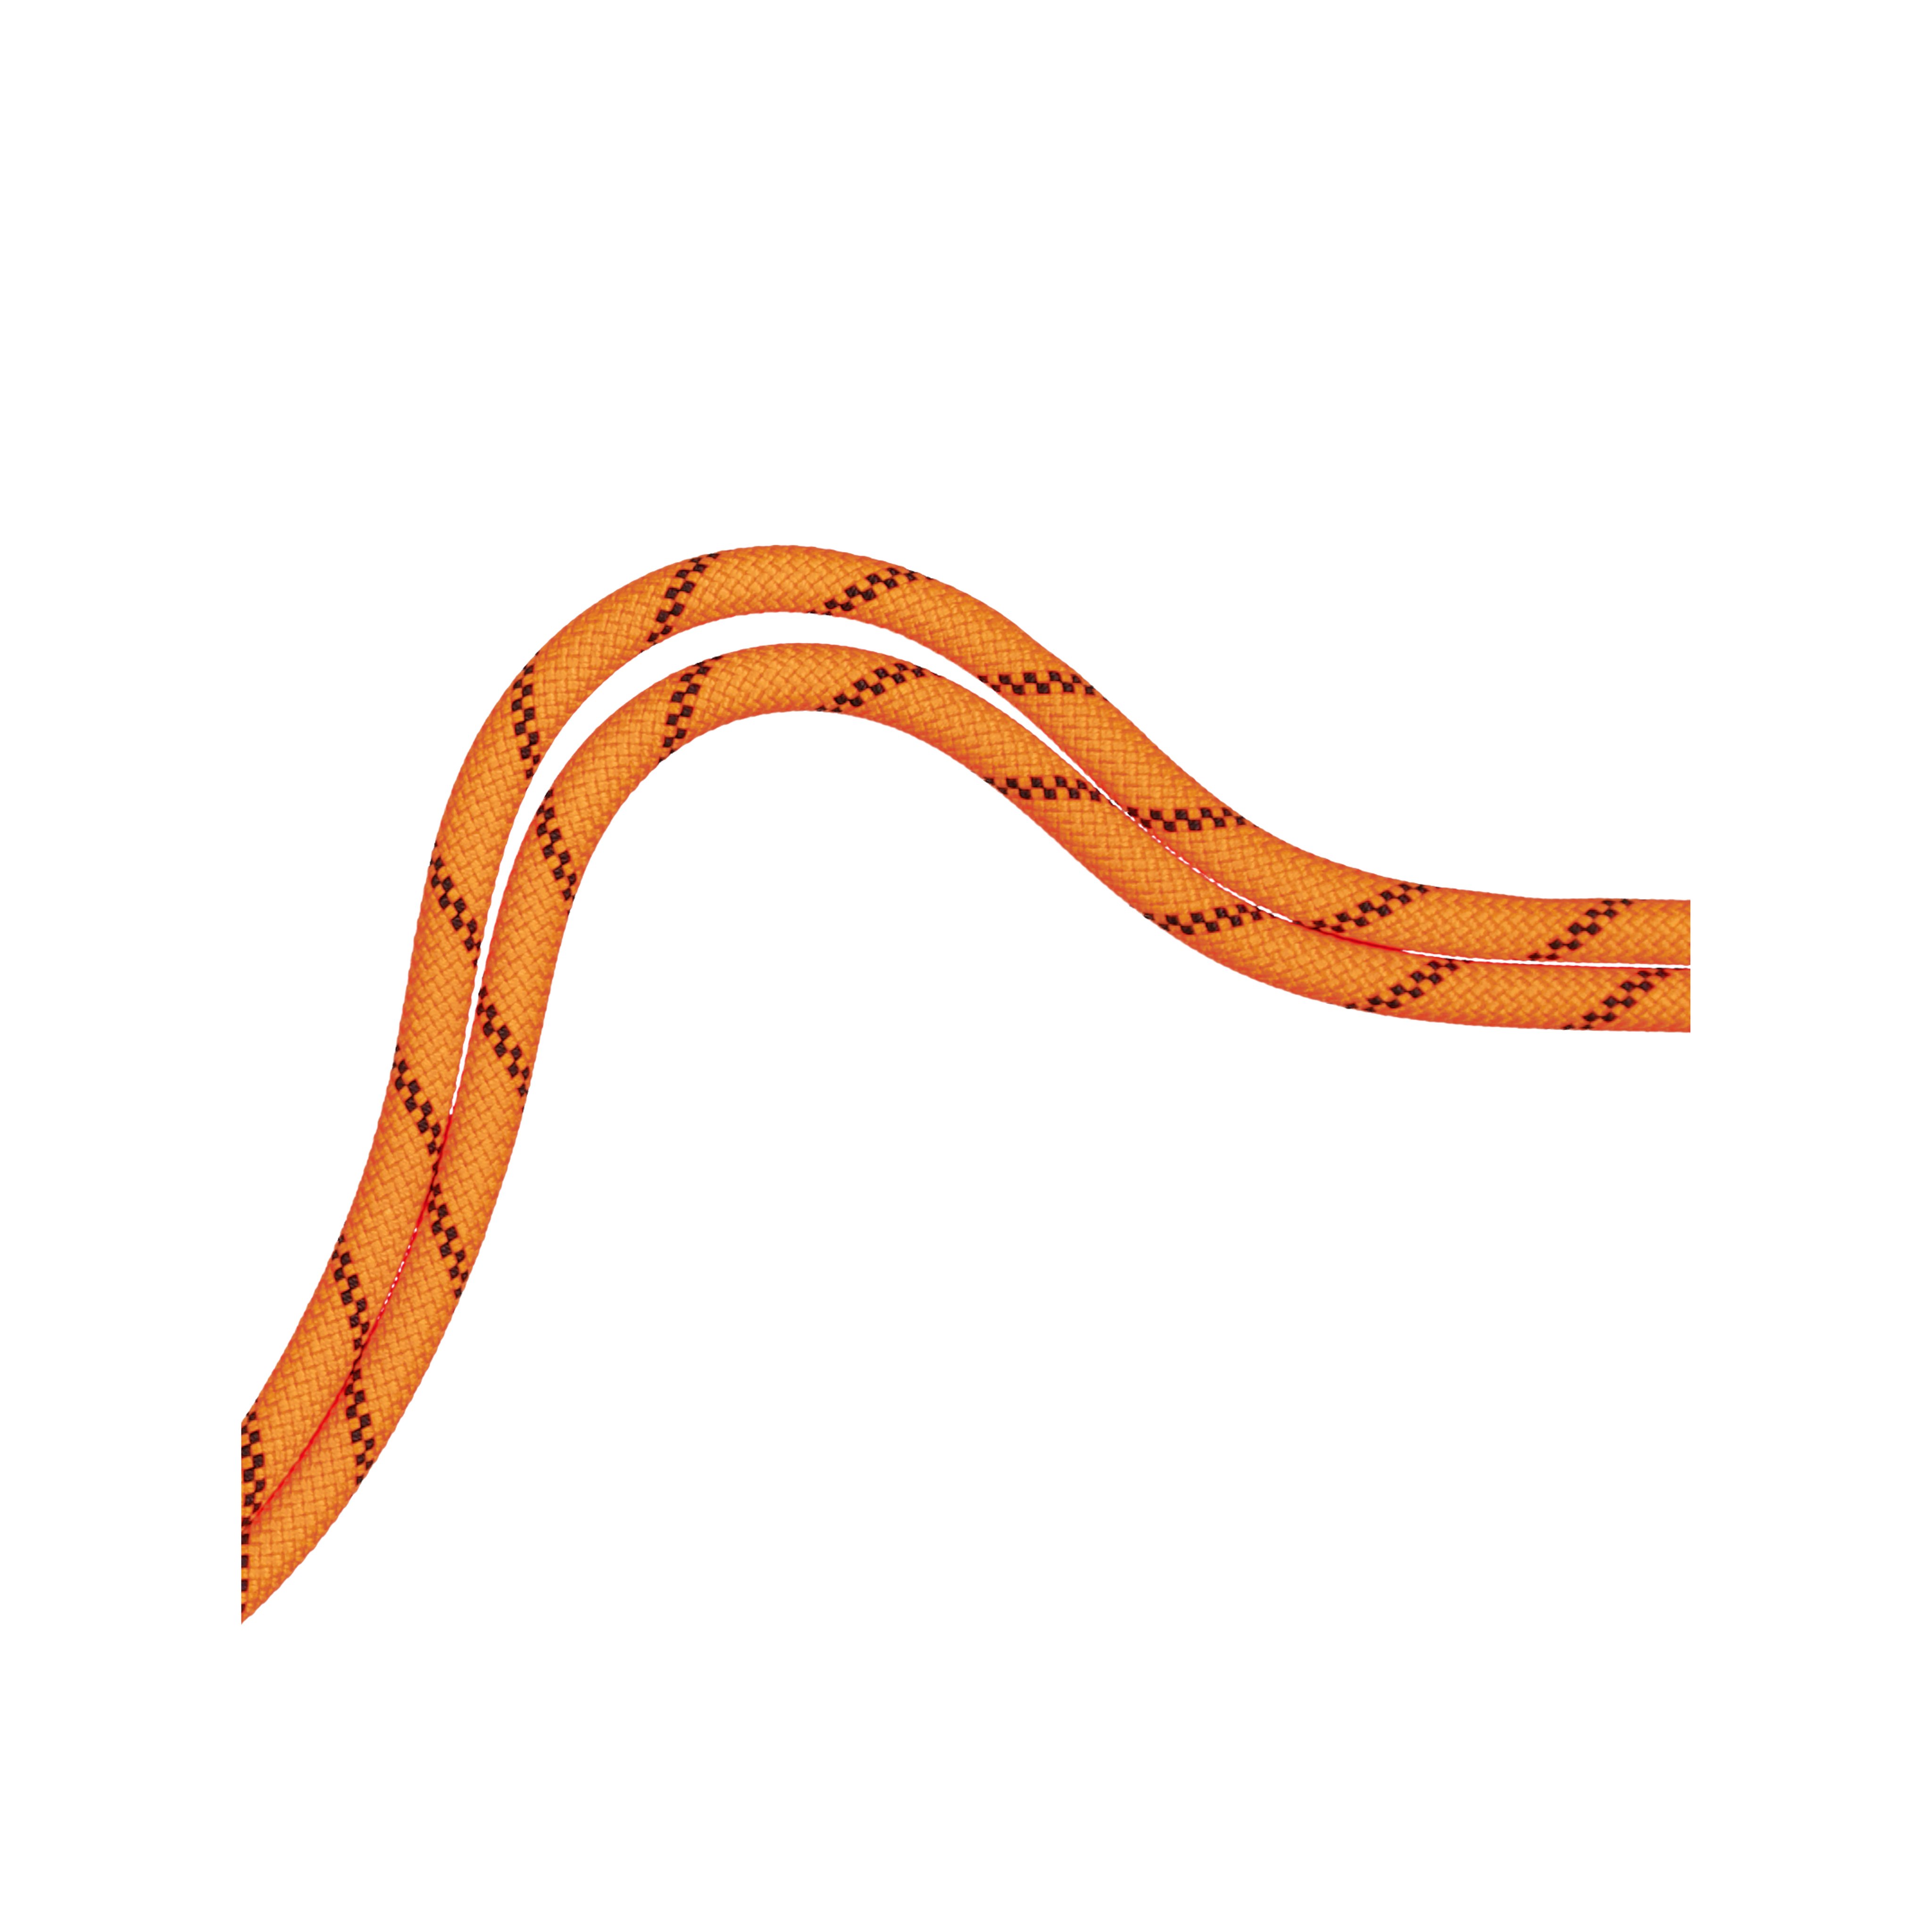 8.7 Alpine Sender Dry Rope product image